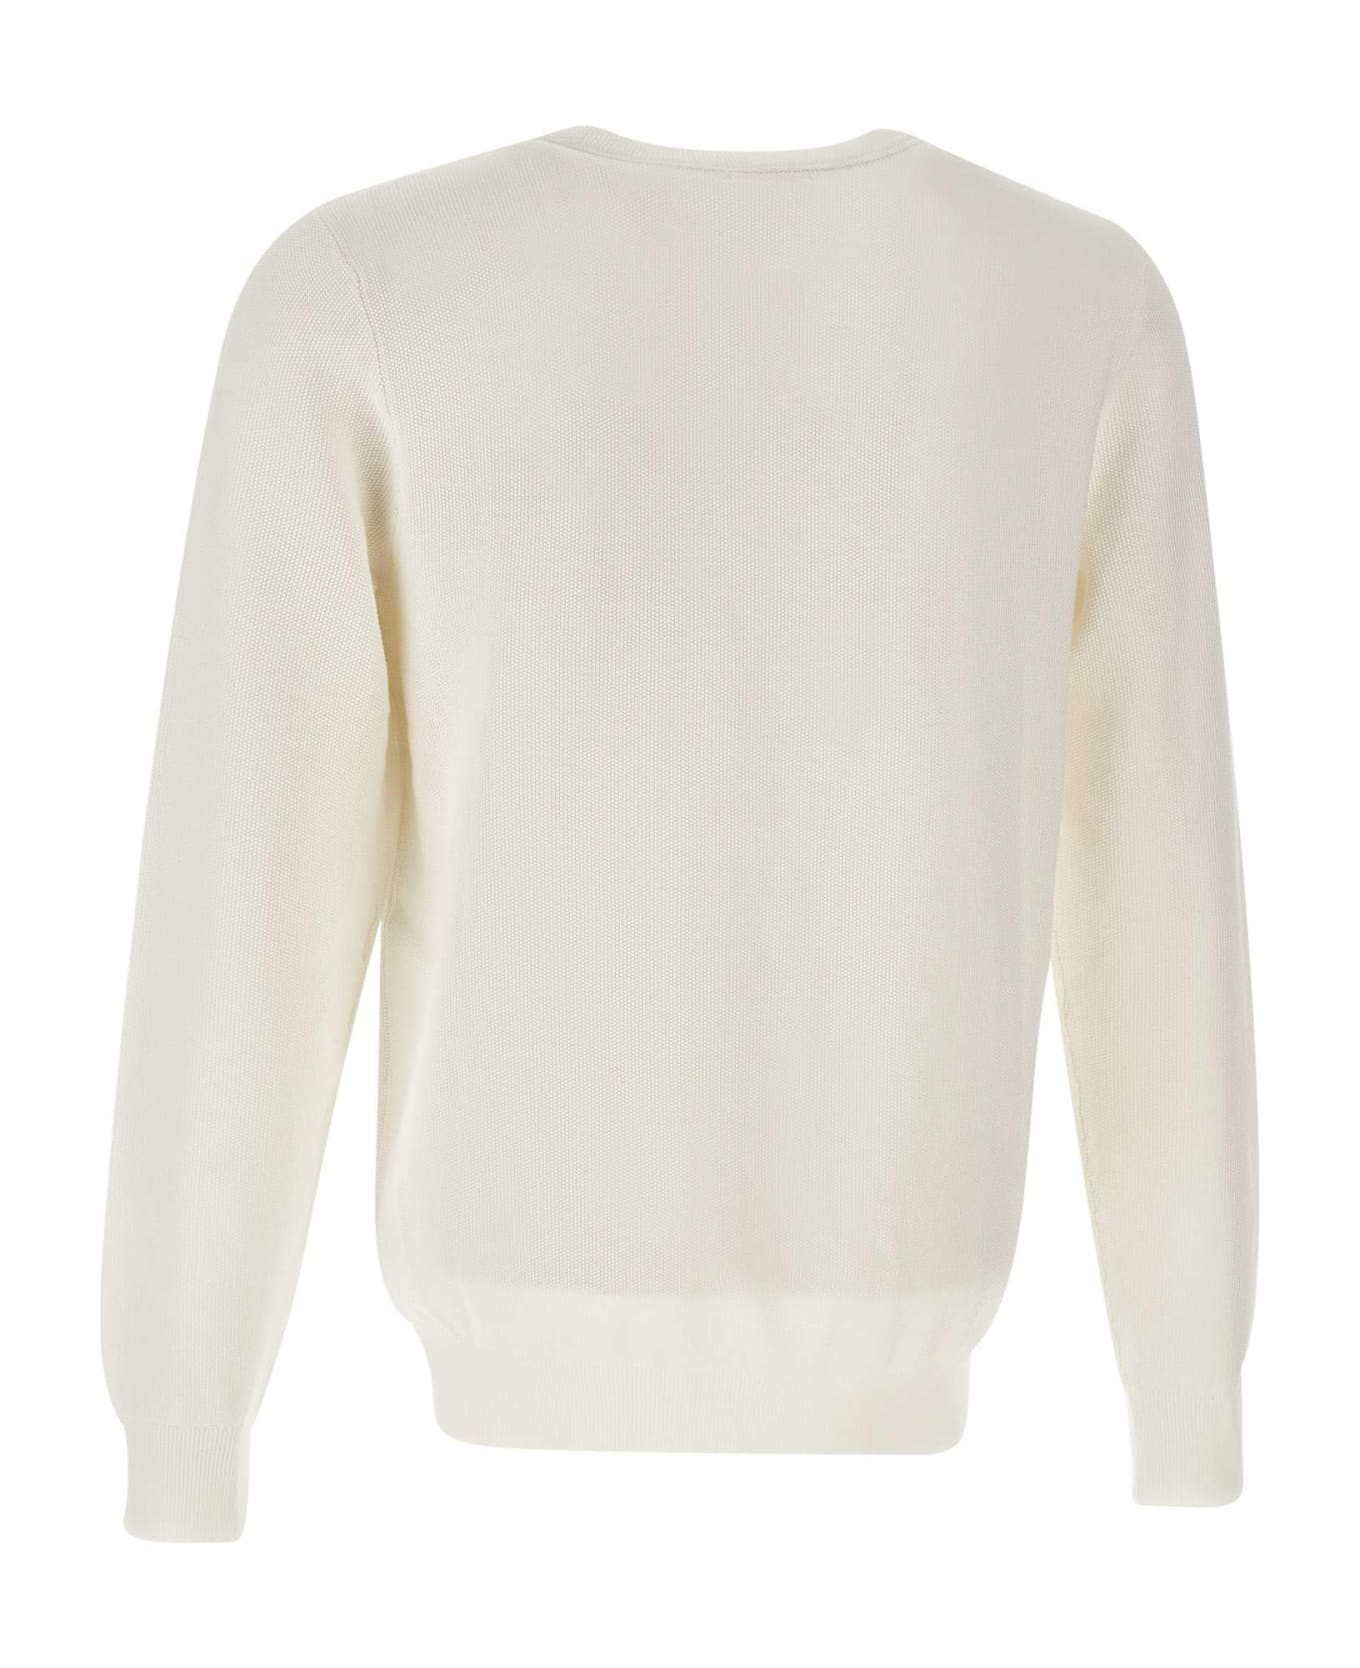 Sun 68 "round Vintage" Cotton Sweater - WHITE ニットウェア